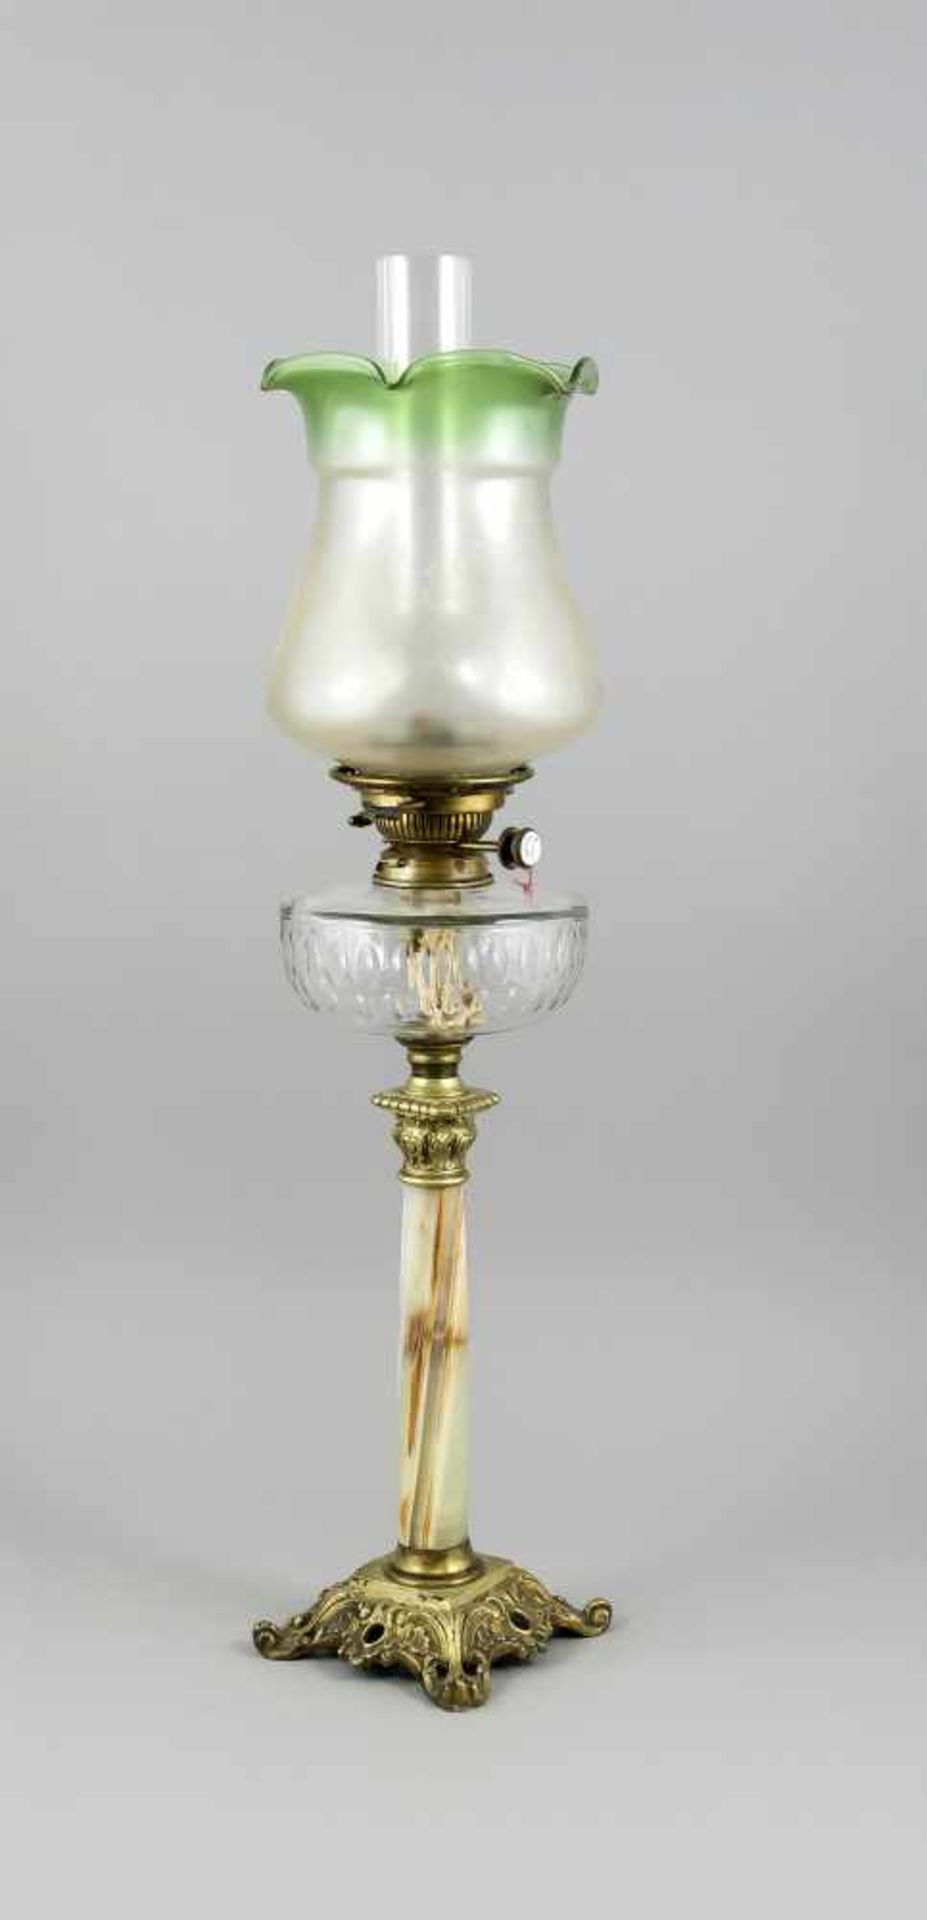 Petroleumlampe, England, um 1900, bez. "Duplex No. 2", durchbrochen gearbeiteter Sockelauf 4